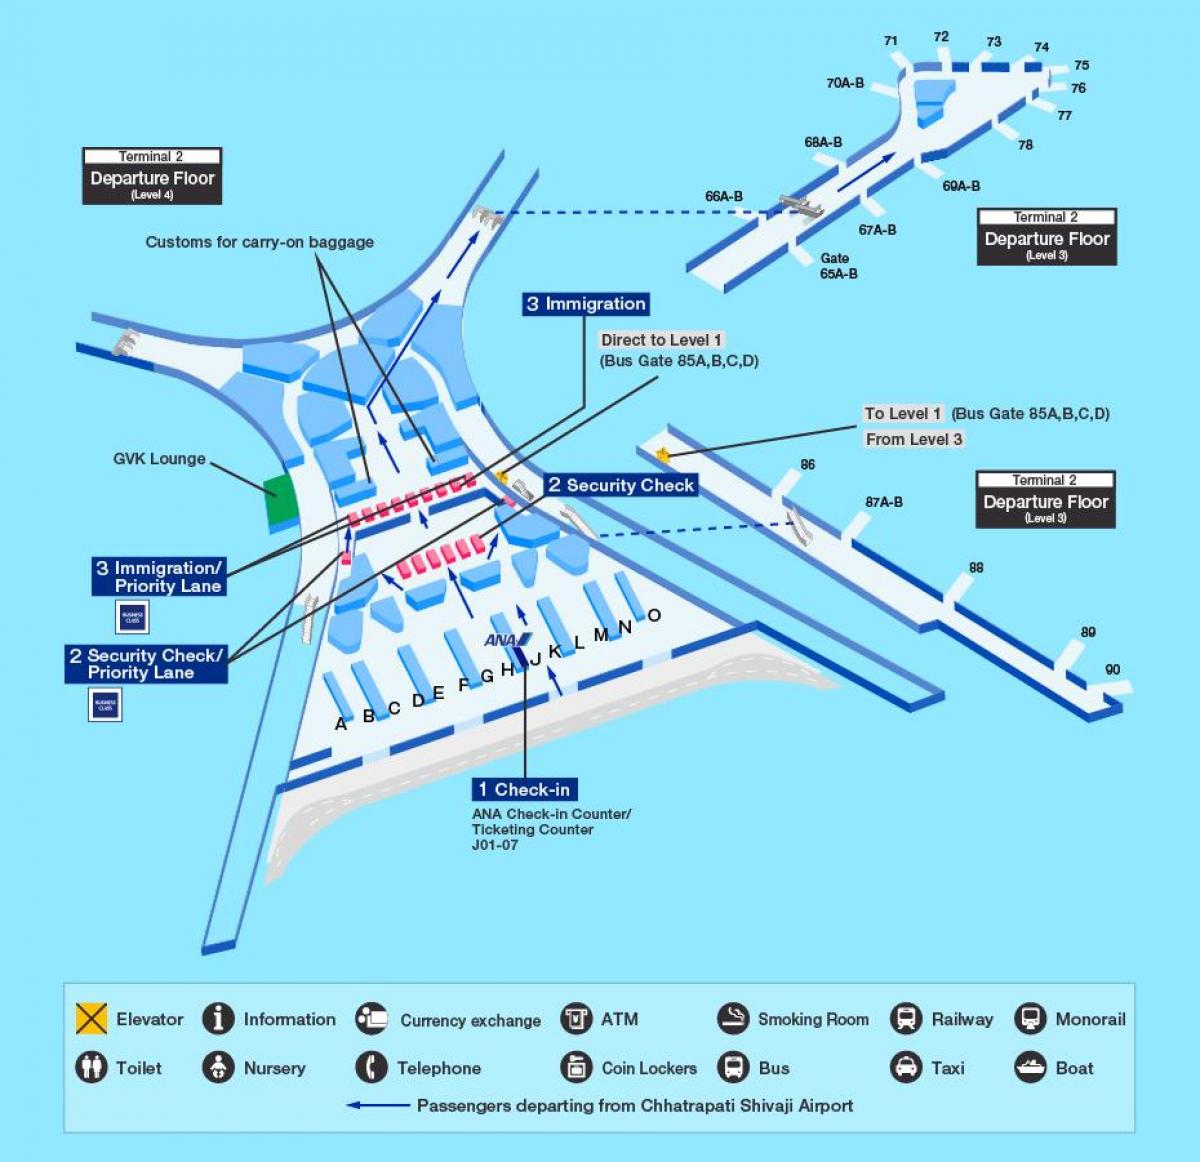 Mumbai international airport terminal 2 peta